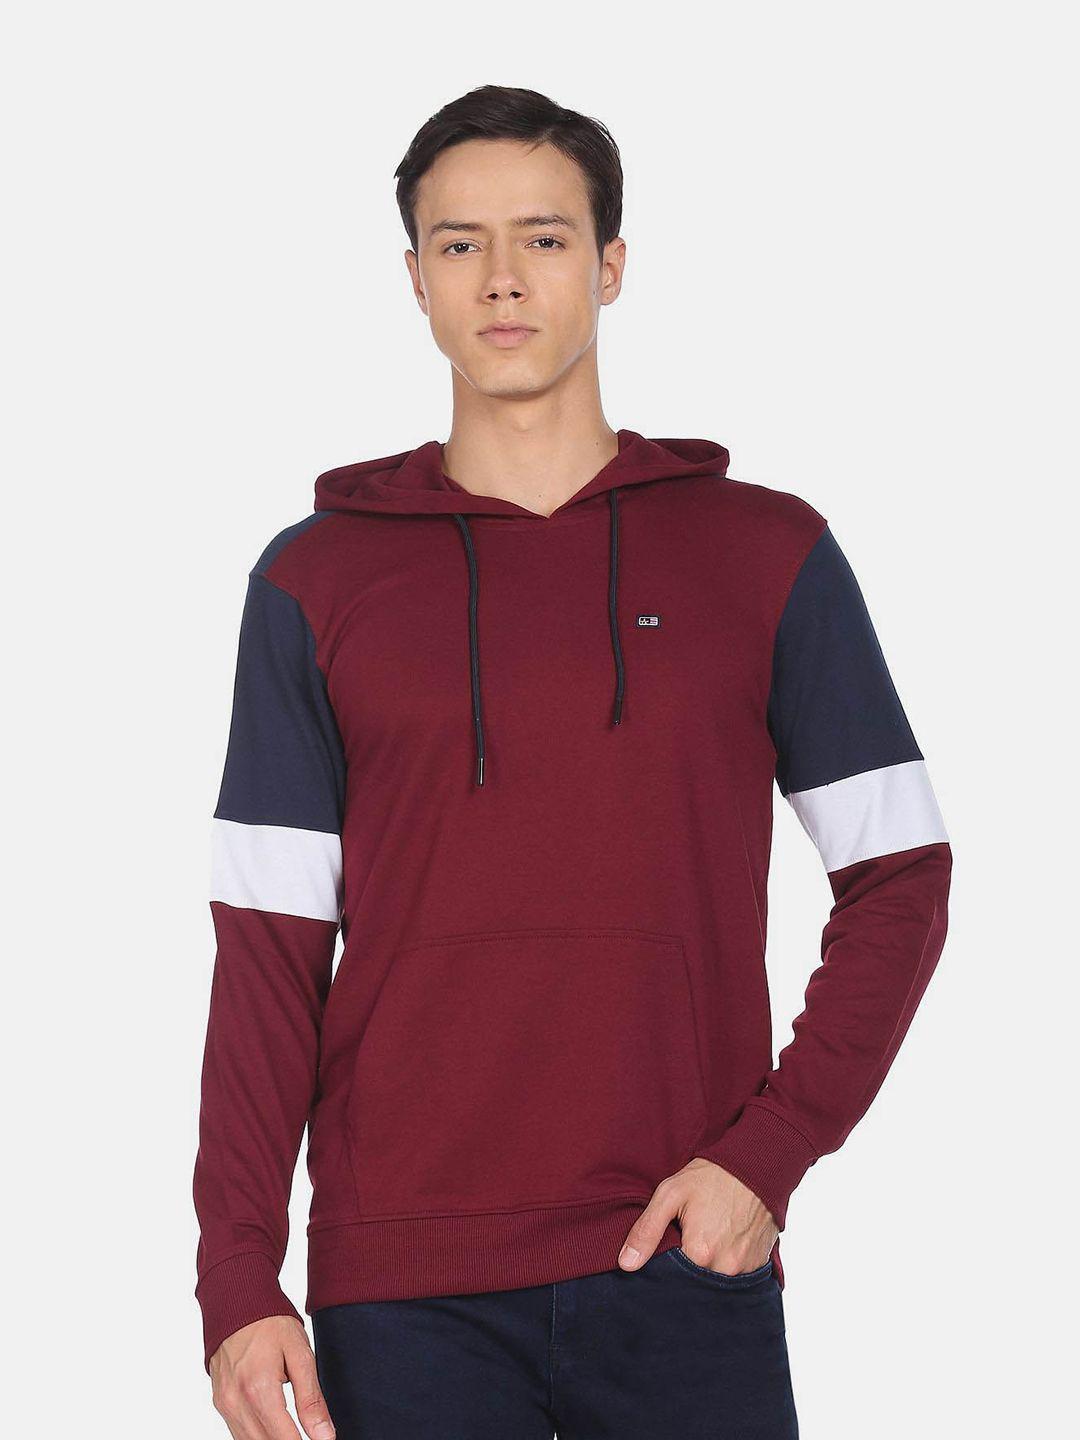 arrow-sport-hooded-neck-sweatshirt